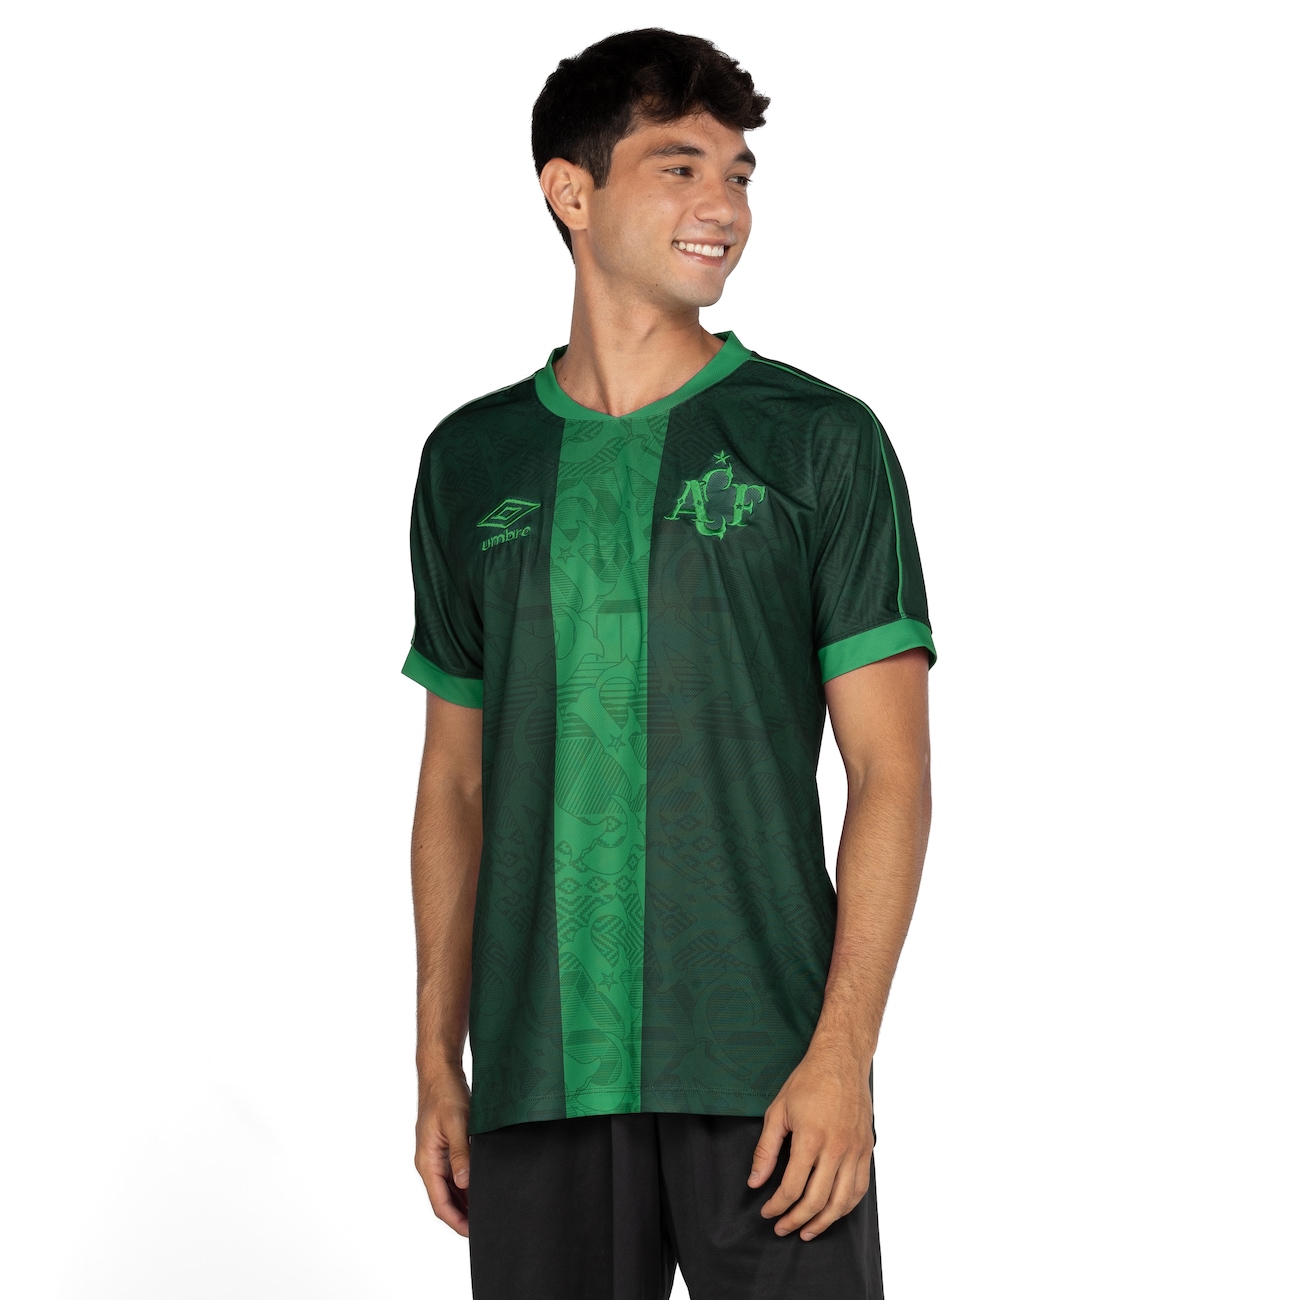 T-shirt De Corrida Técnica De Homem Kappa Eoste. Verde.